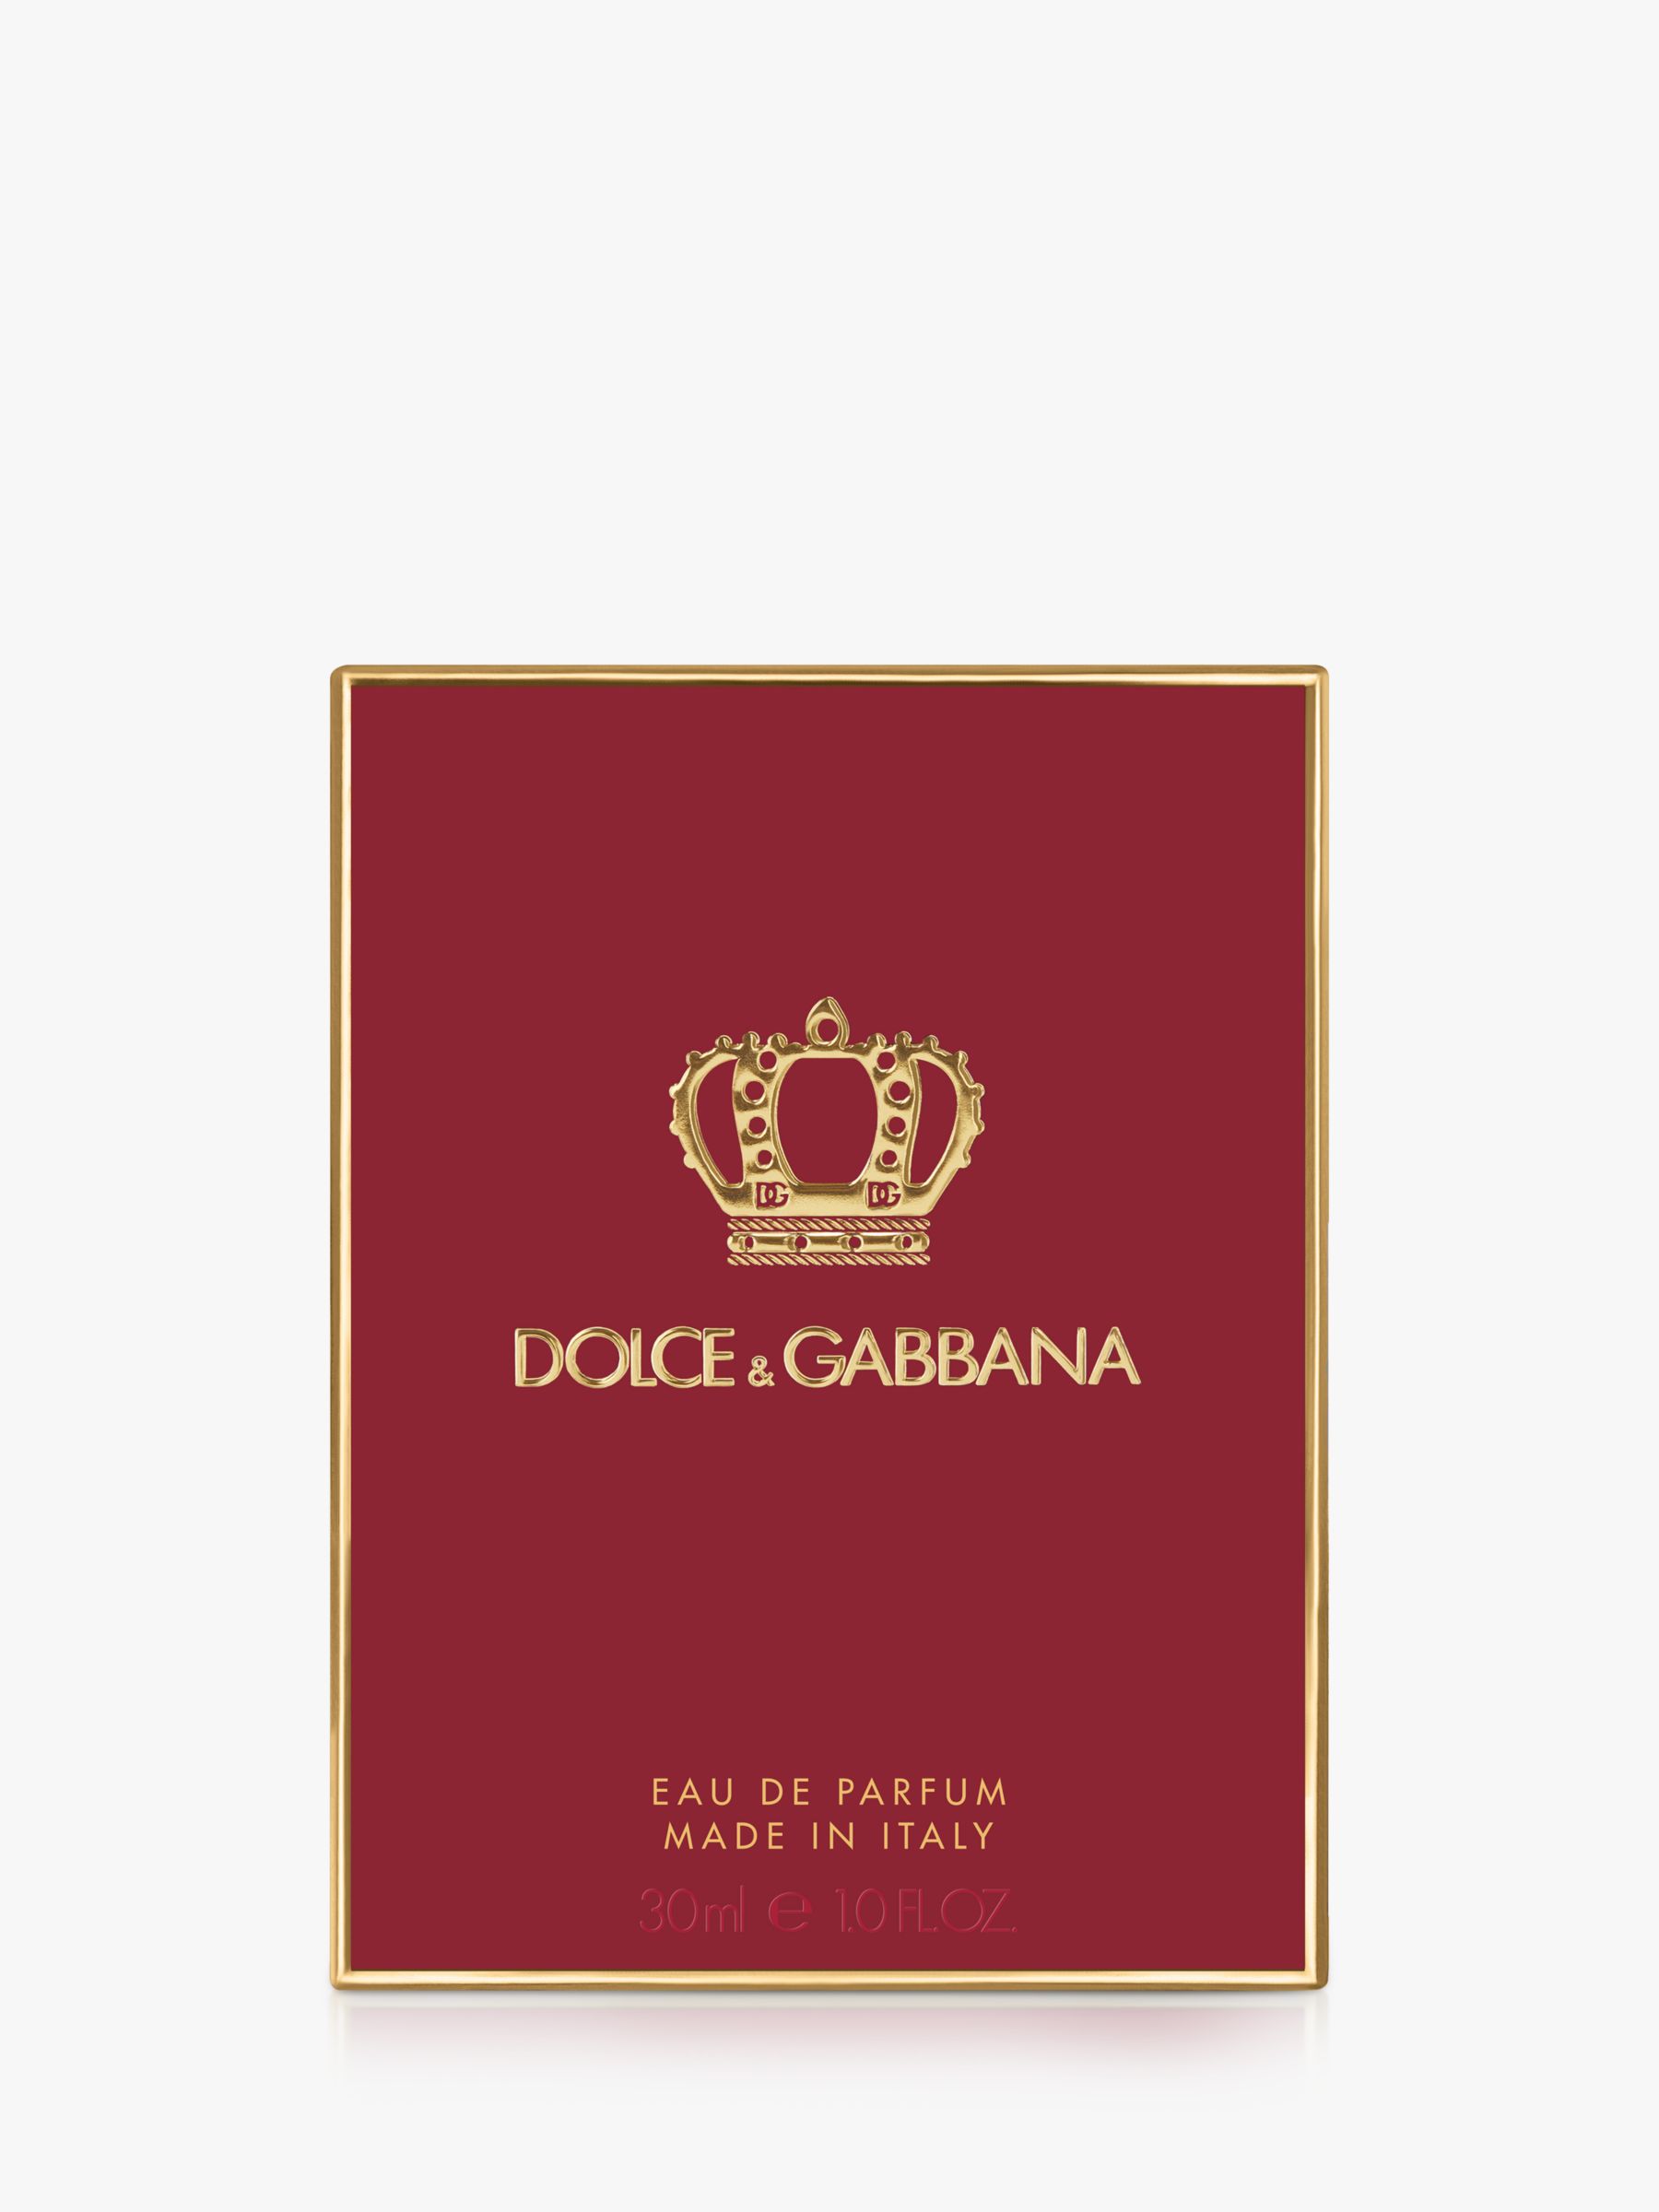 Dolce & Gabbana Q by Dolce & Gabbana Eau de Parfum, 30ml 3